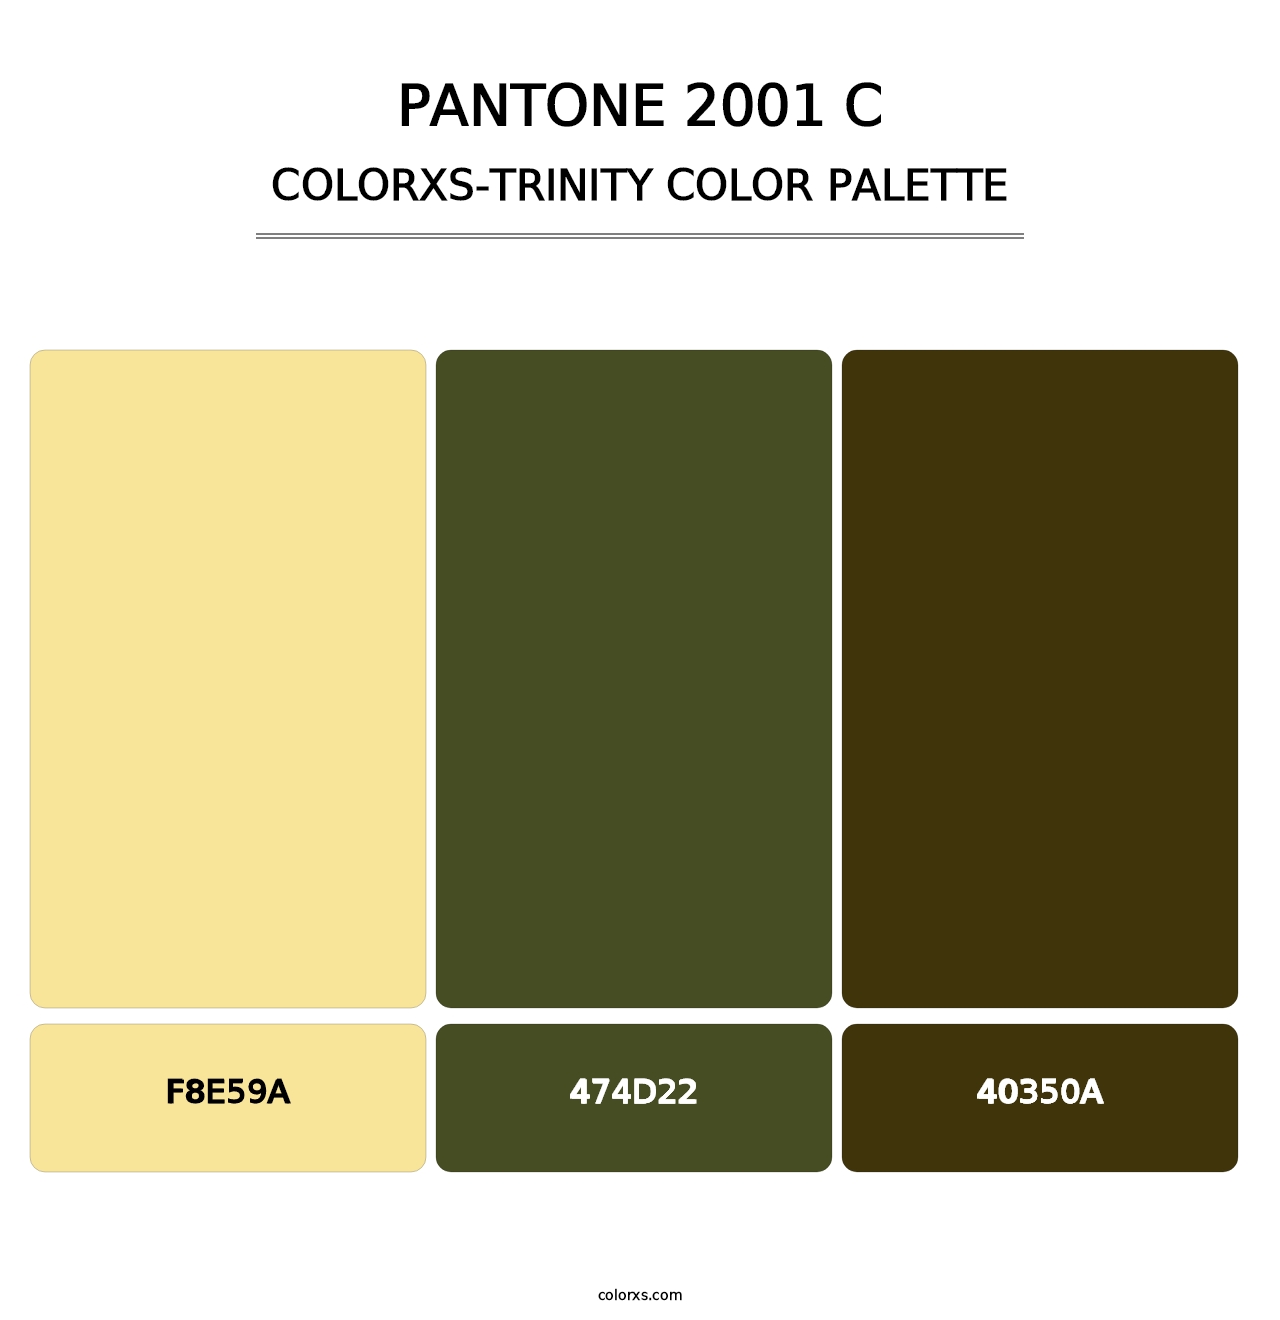 PANTONE 2001 C - Colorxs Trinity Palette